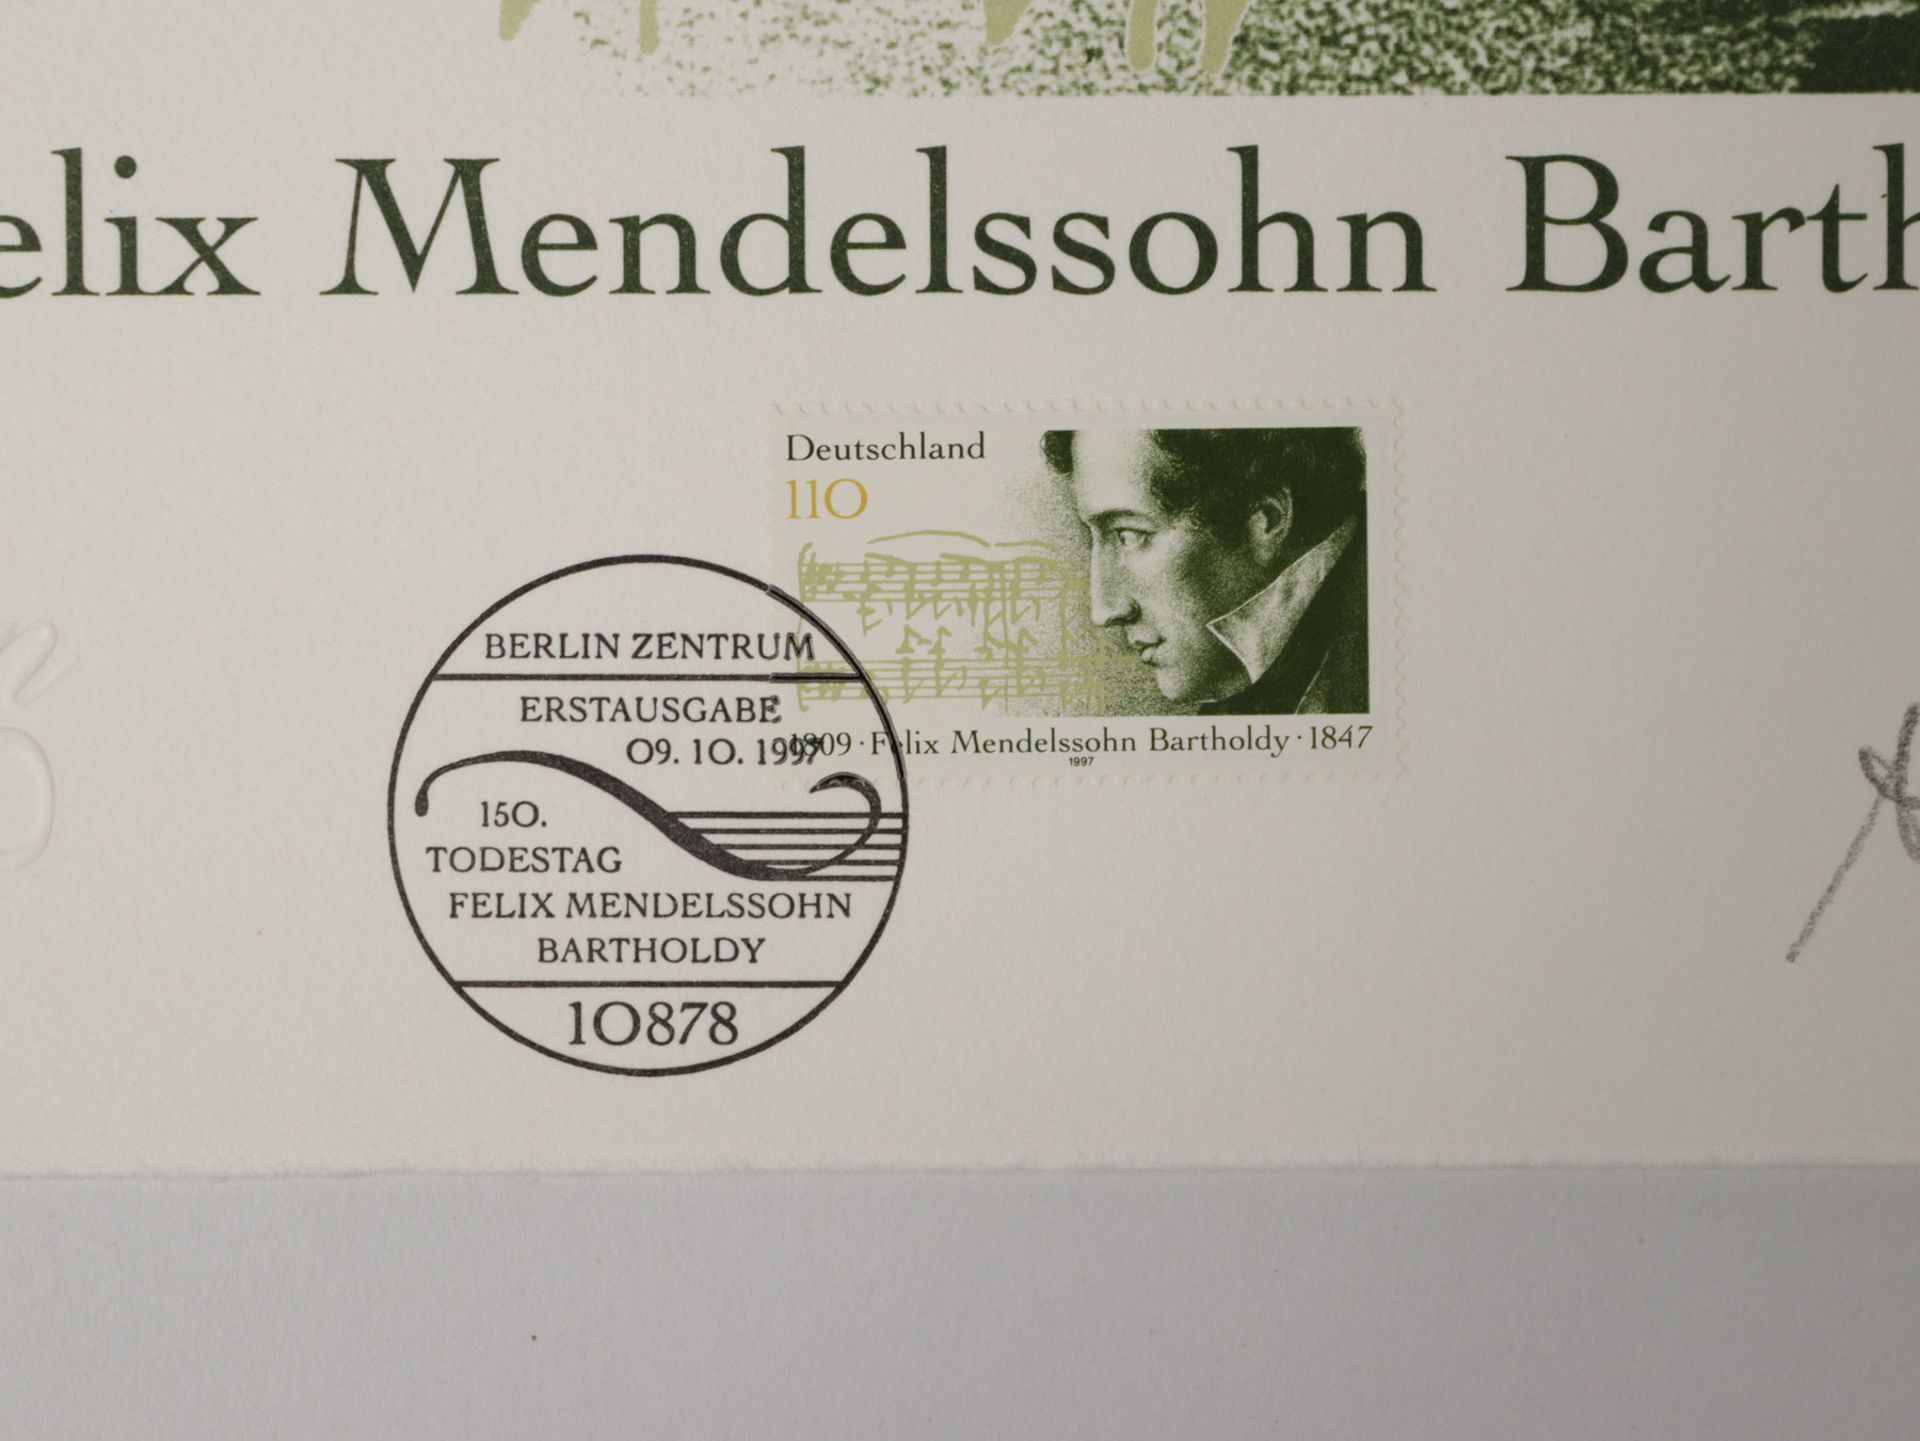 Briefmarken - Kunstgraphiken 1997 - Image 18 of 18